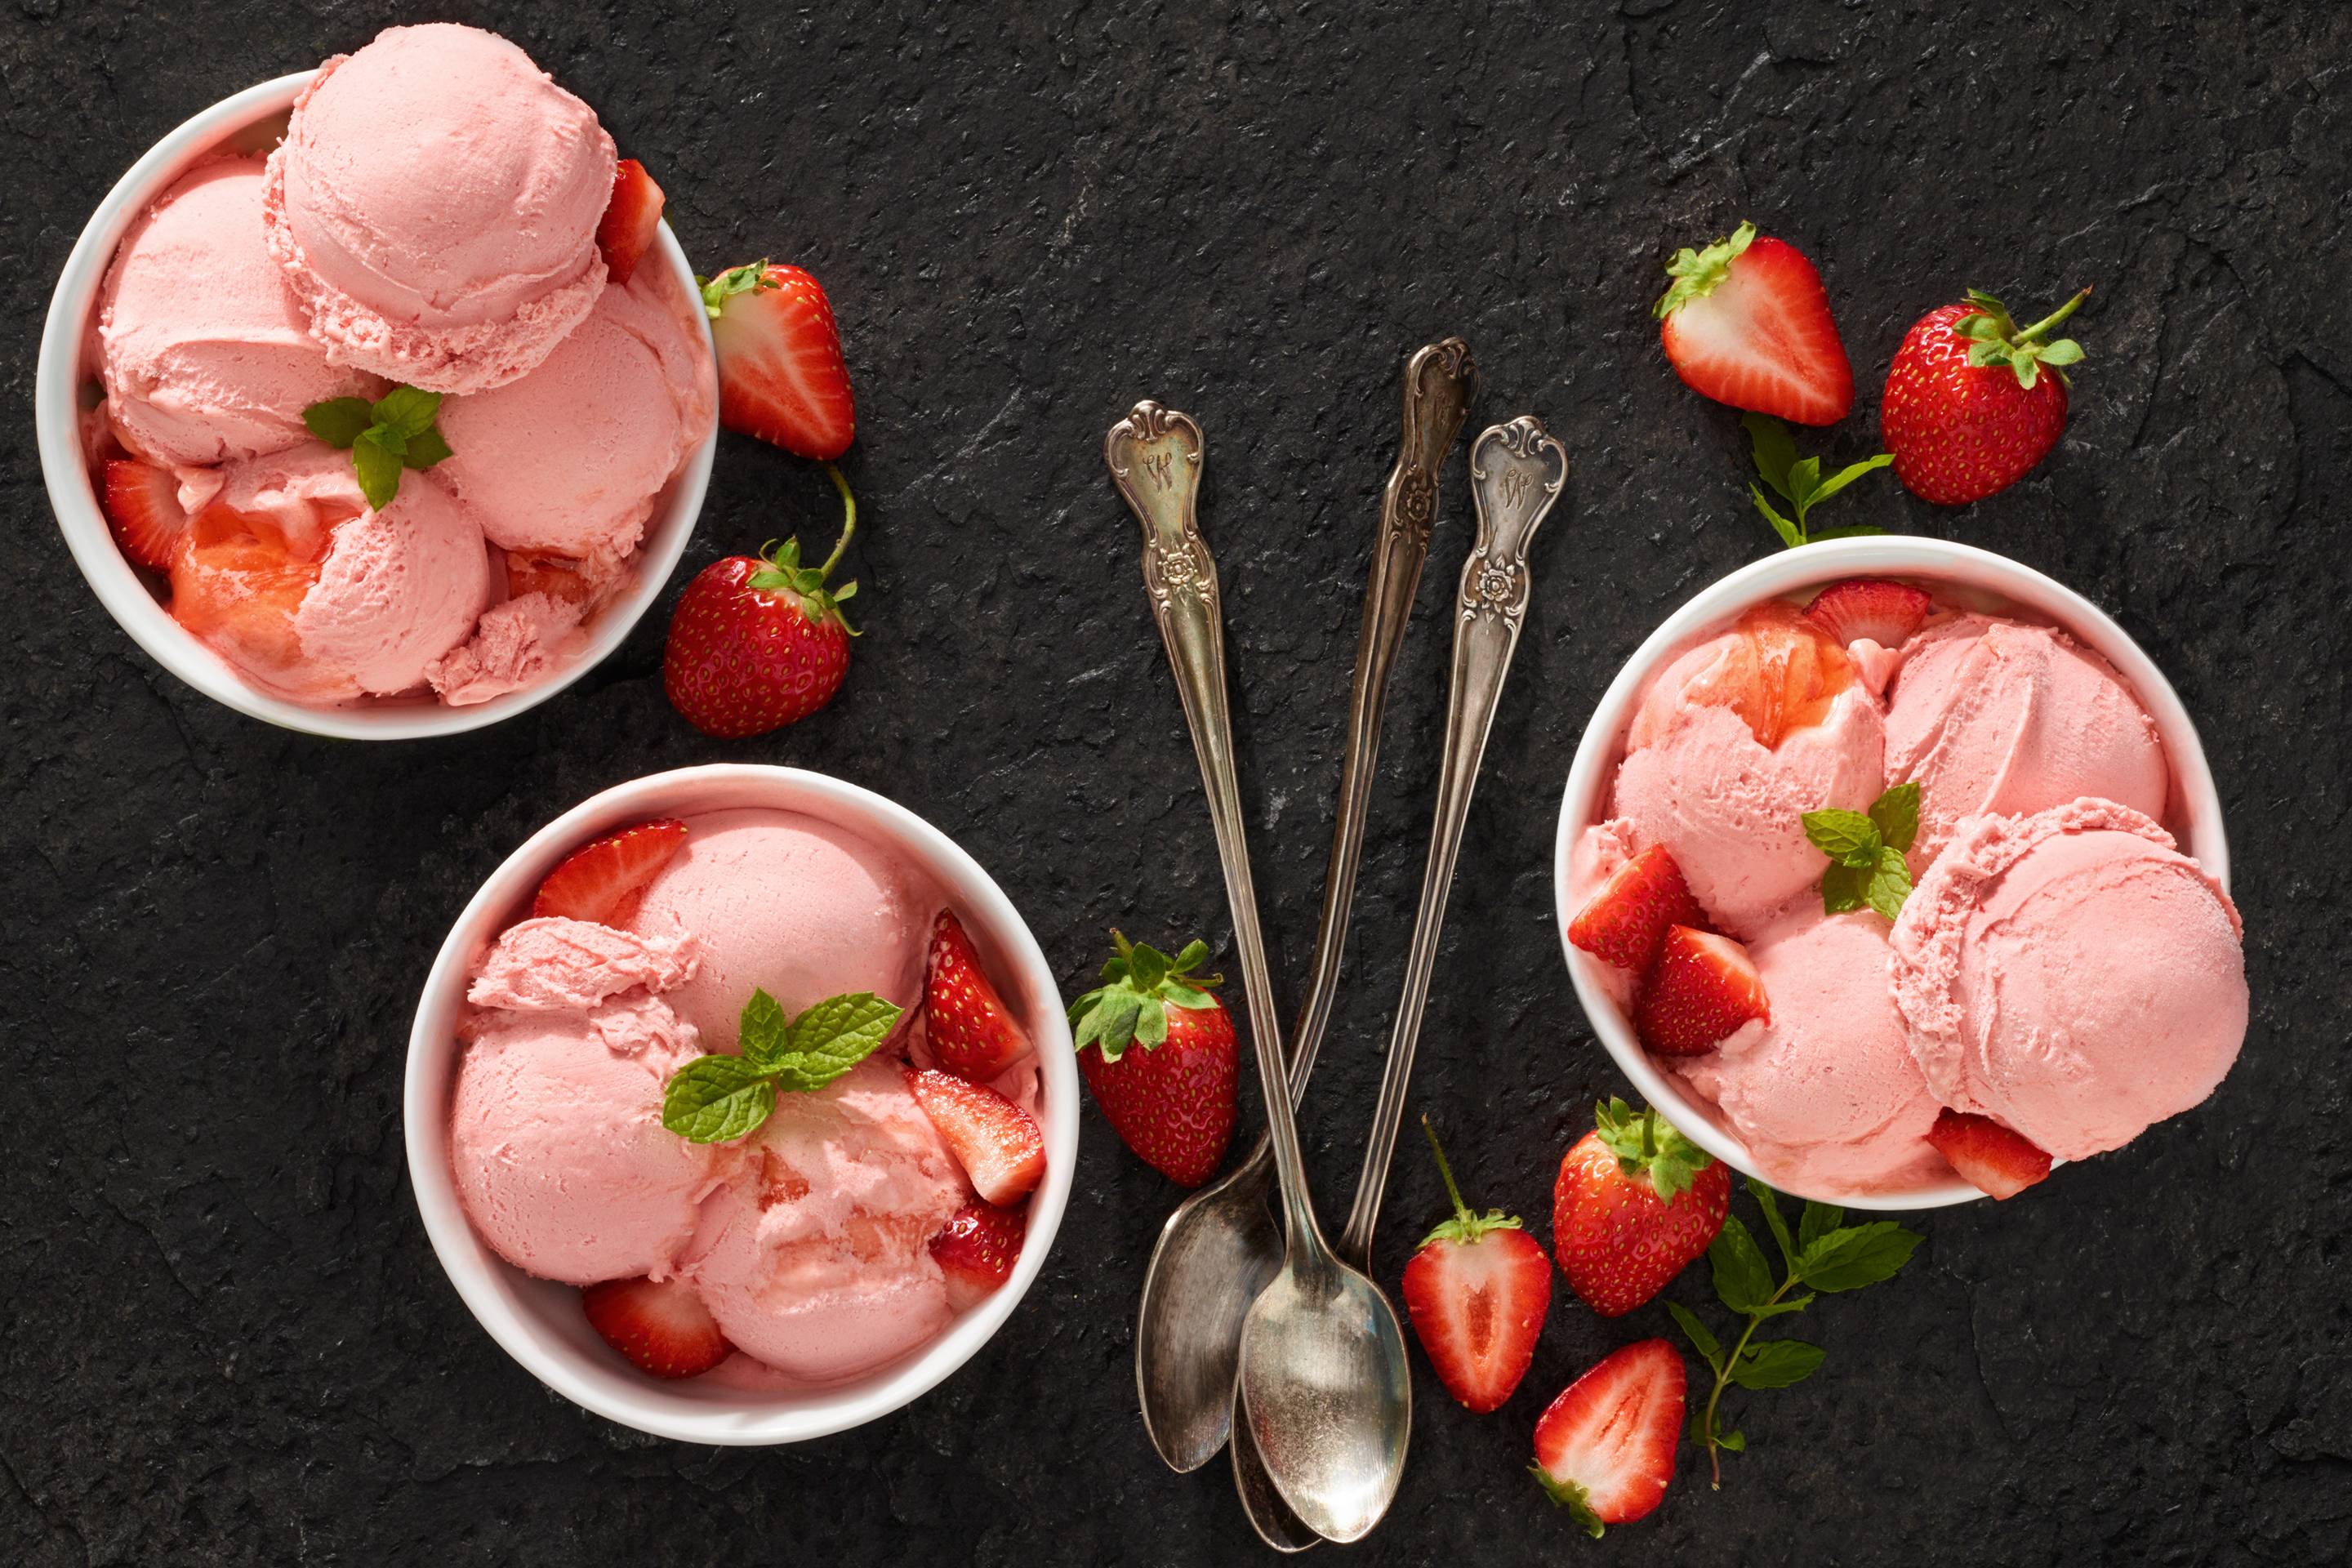 Strawberry Ice Cream with fresh strawberries